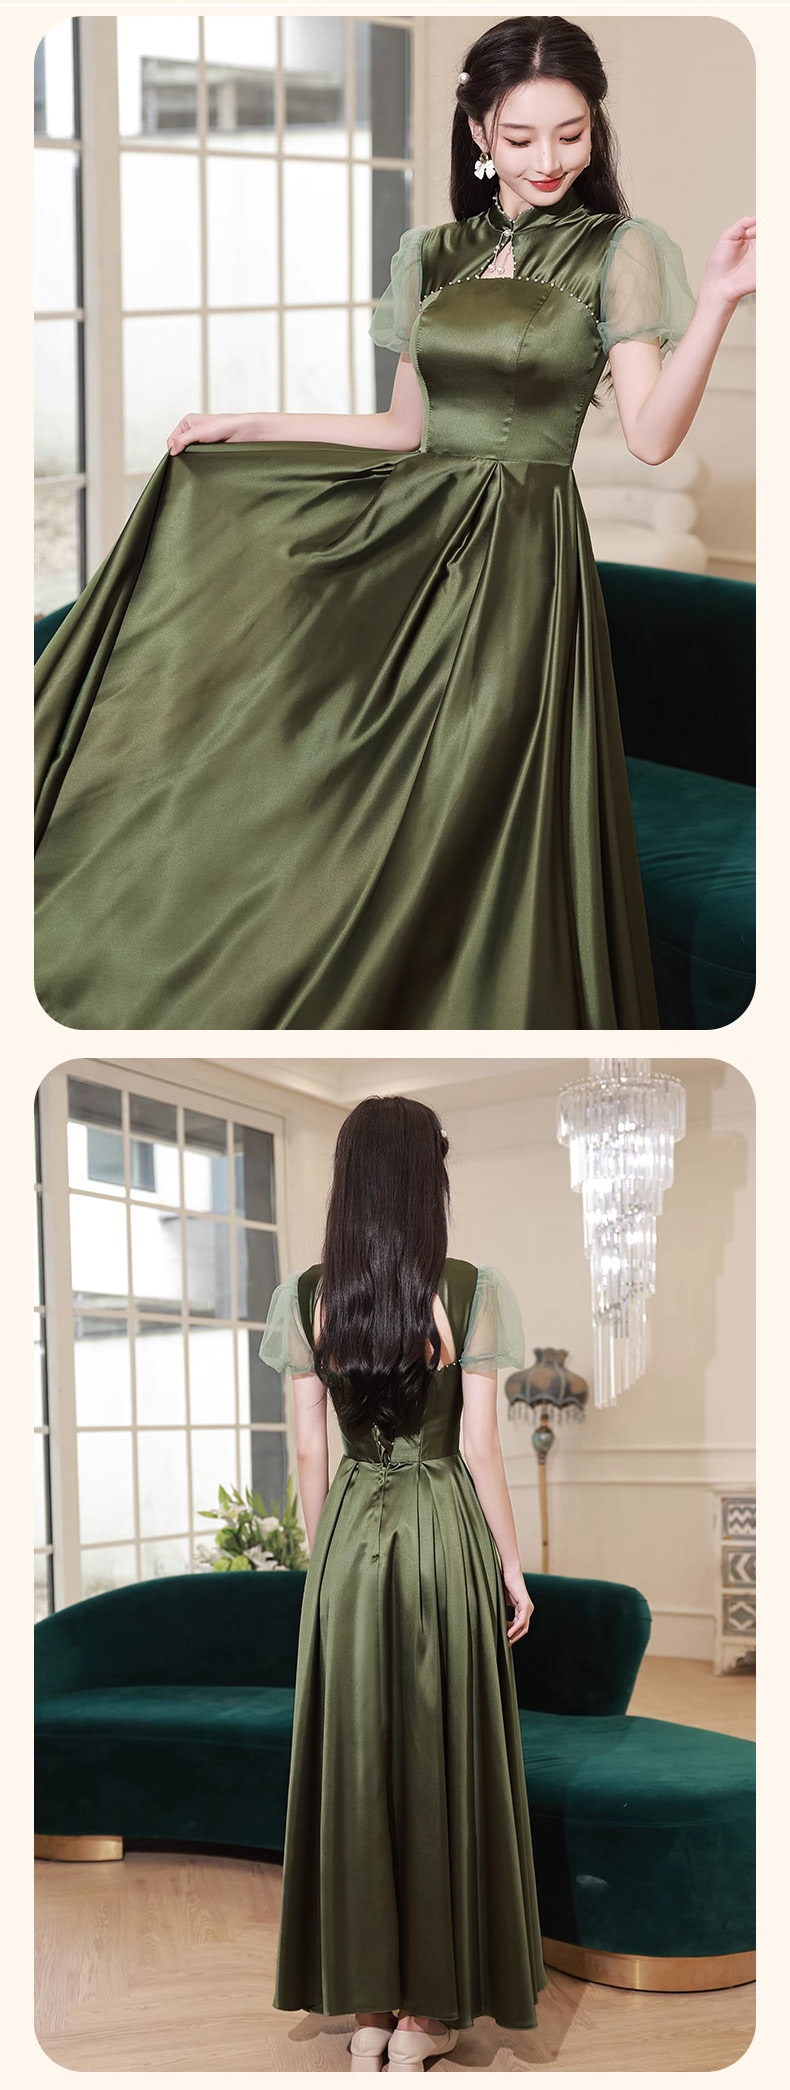 Simple-Ladies-Emerald-Green-Satin-Bridesmaid-Dress-Evening-Gown22